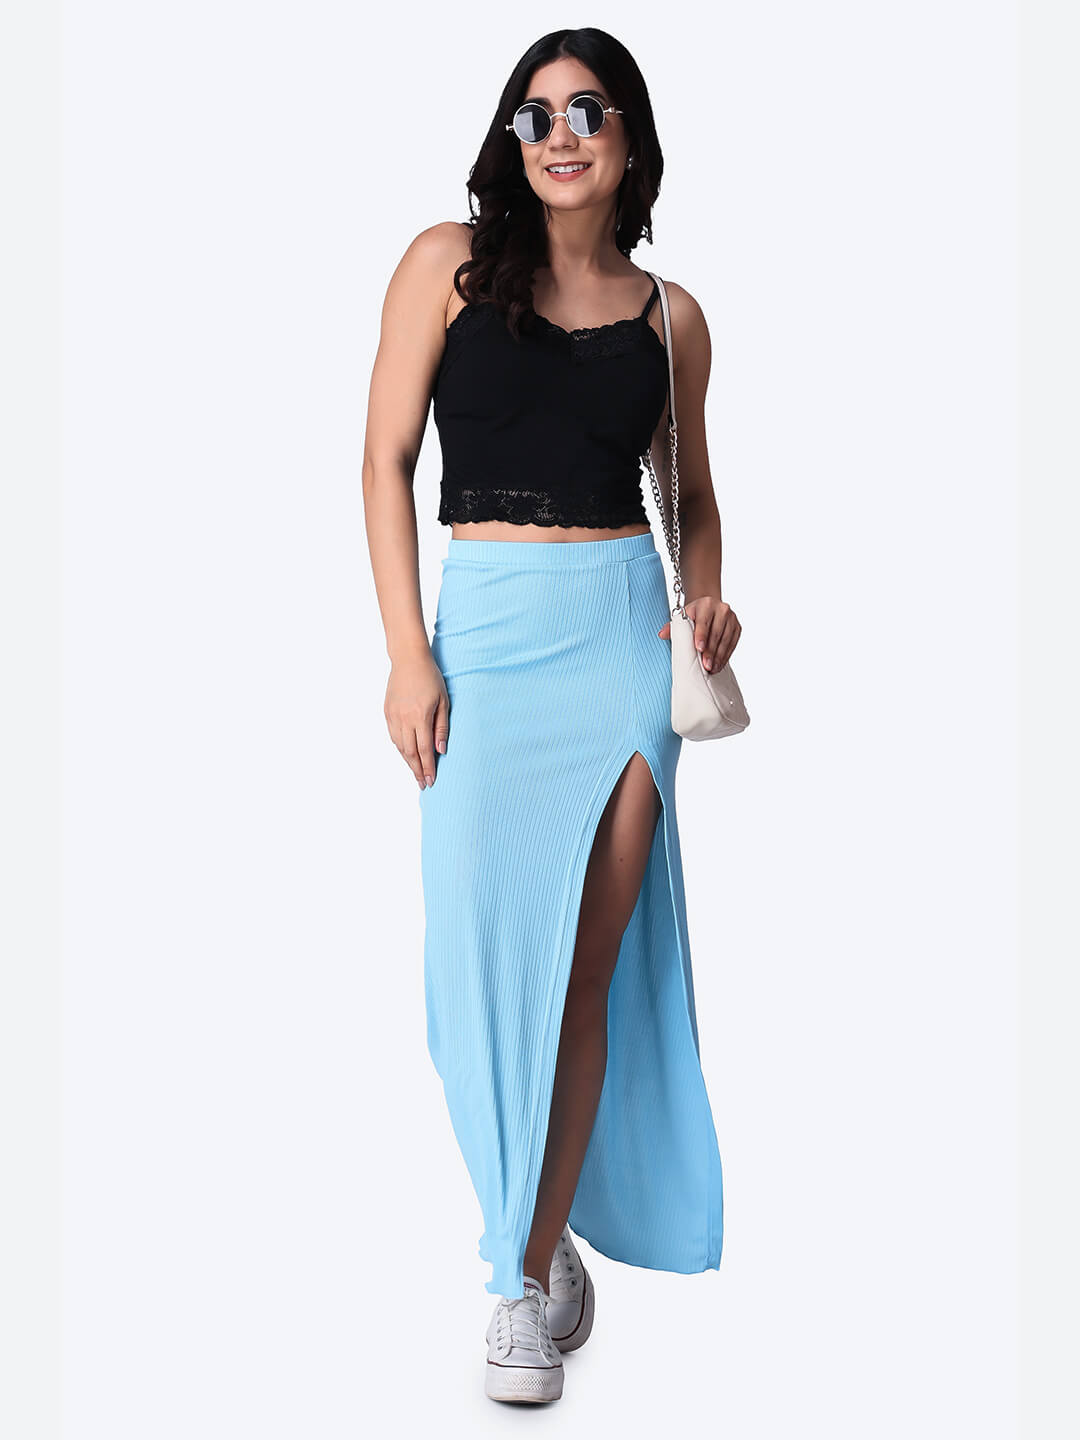 Popwings Women Casual Sky Blue Solid Self Design Ribbed Long Slit Skirt